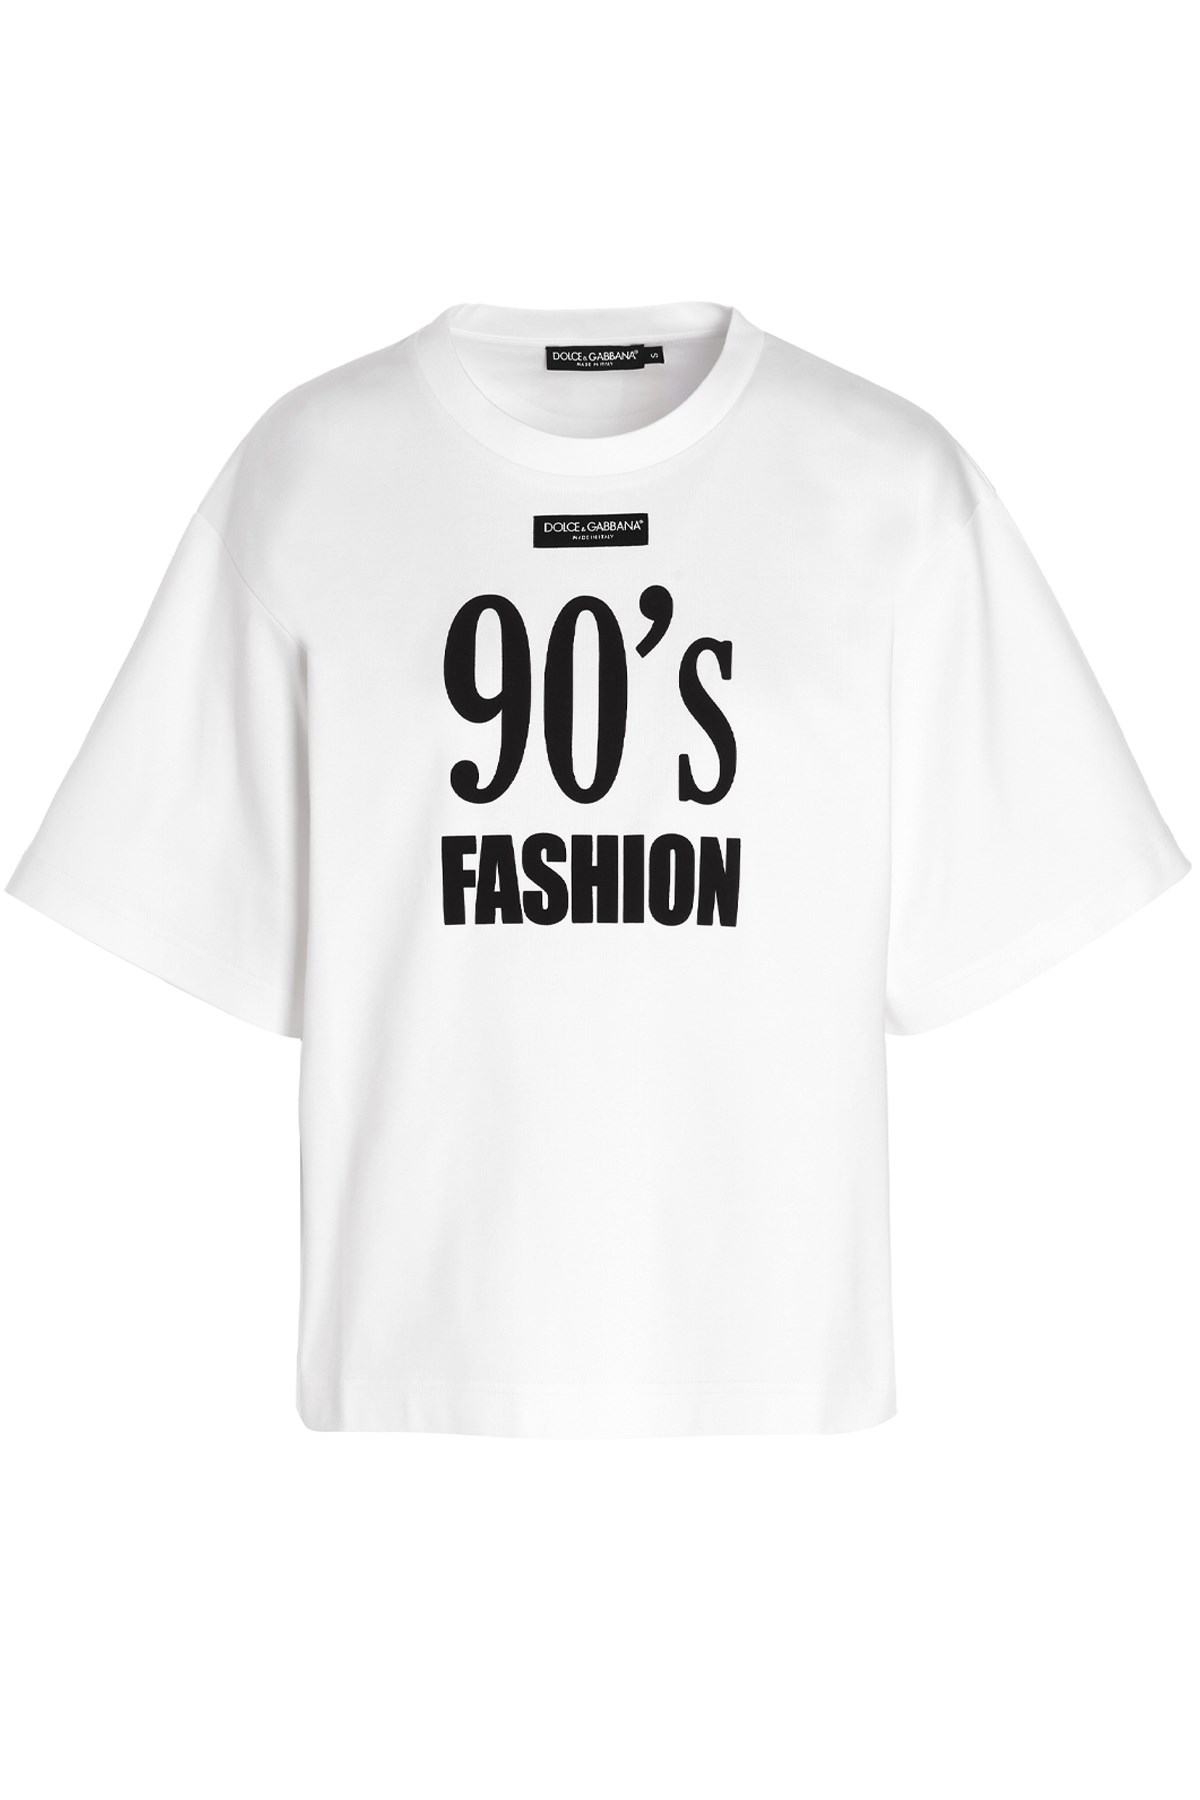 DOLCE & GABBANA T-Shirt Mit Druck '90S Fashion'